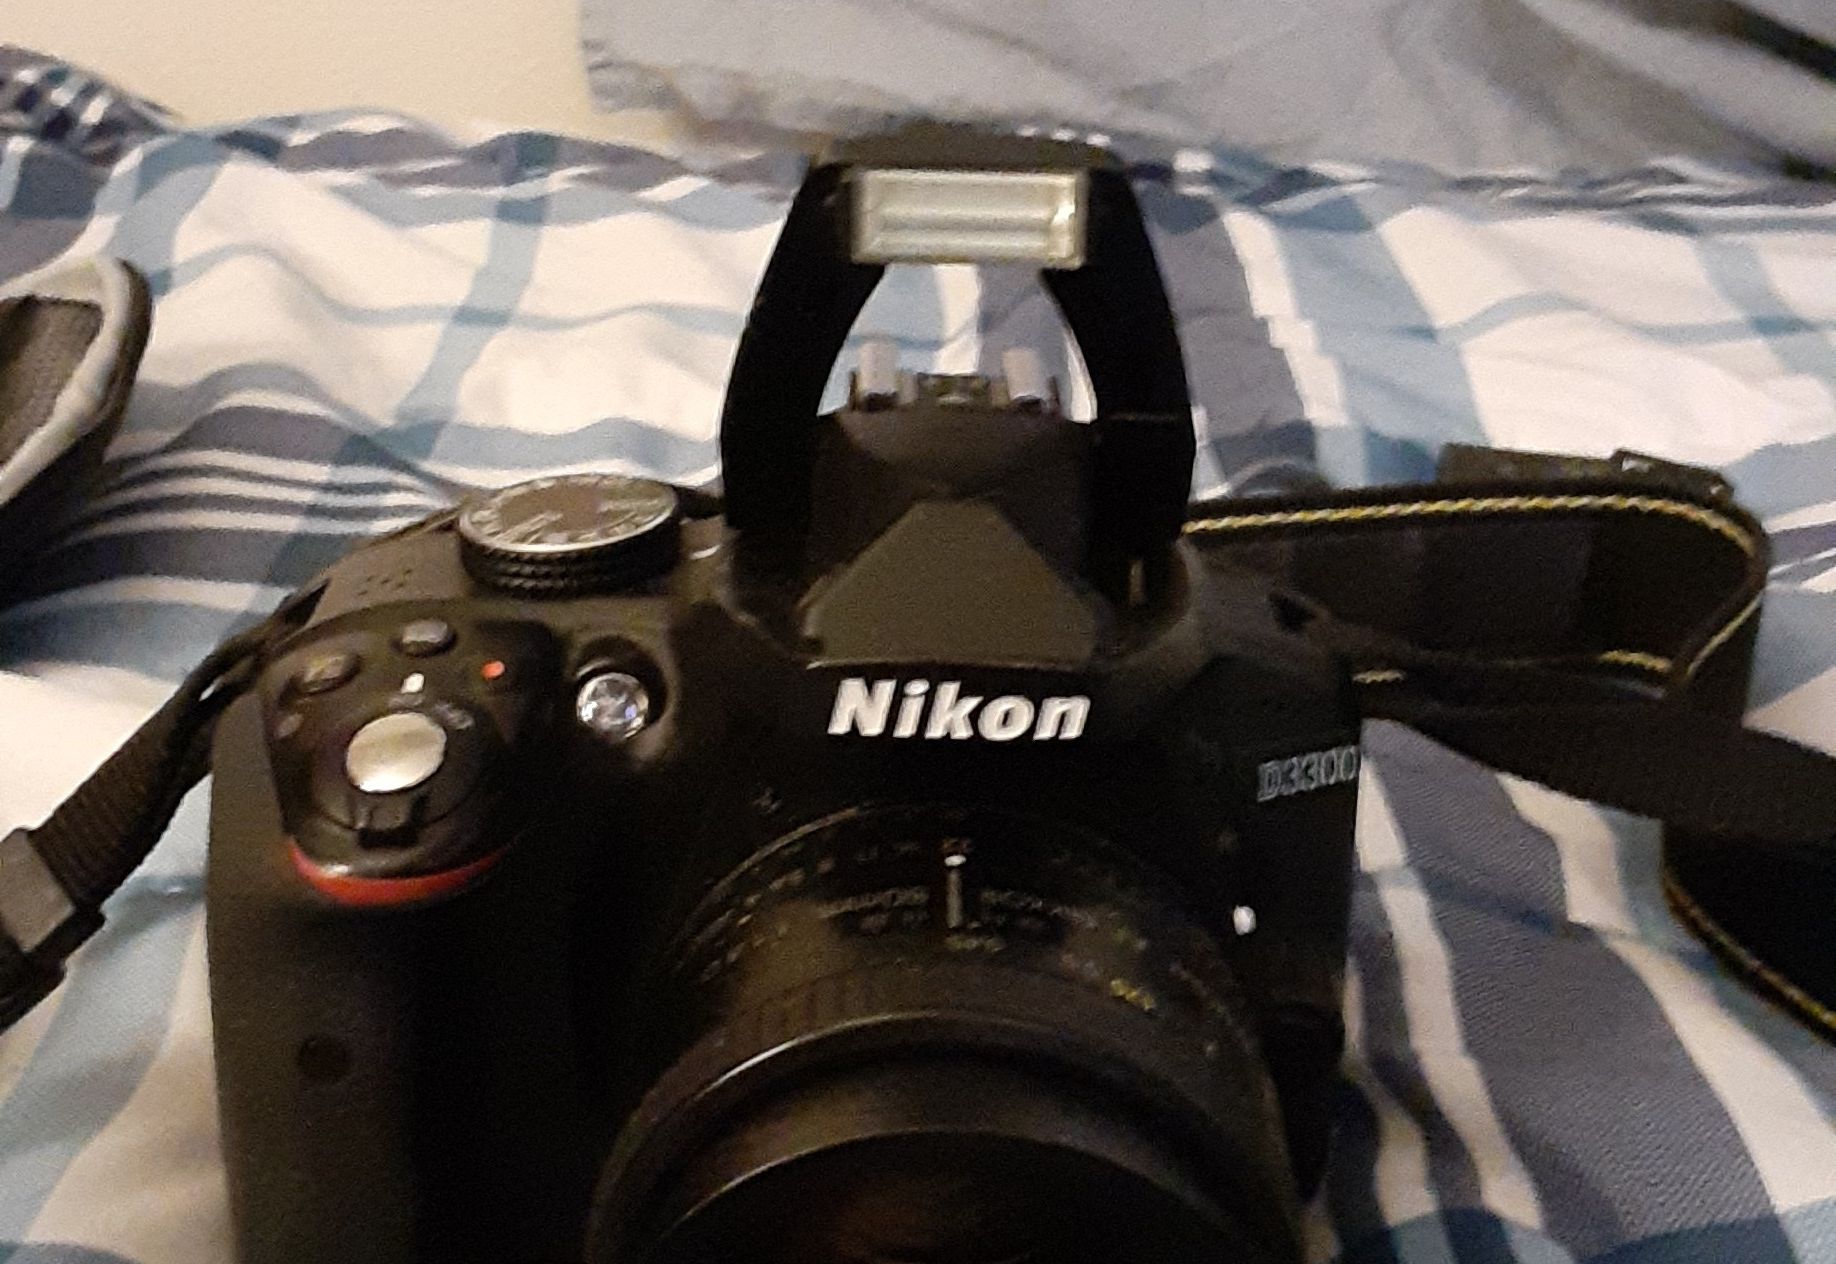 Nikon d3300 digital camera